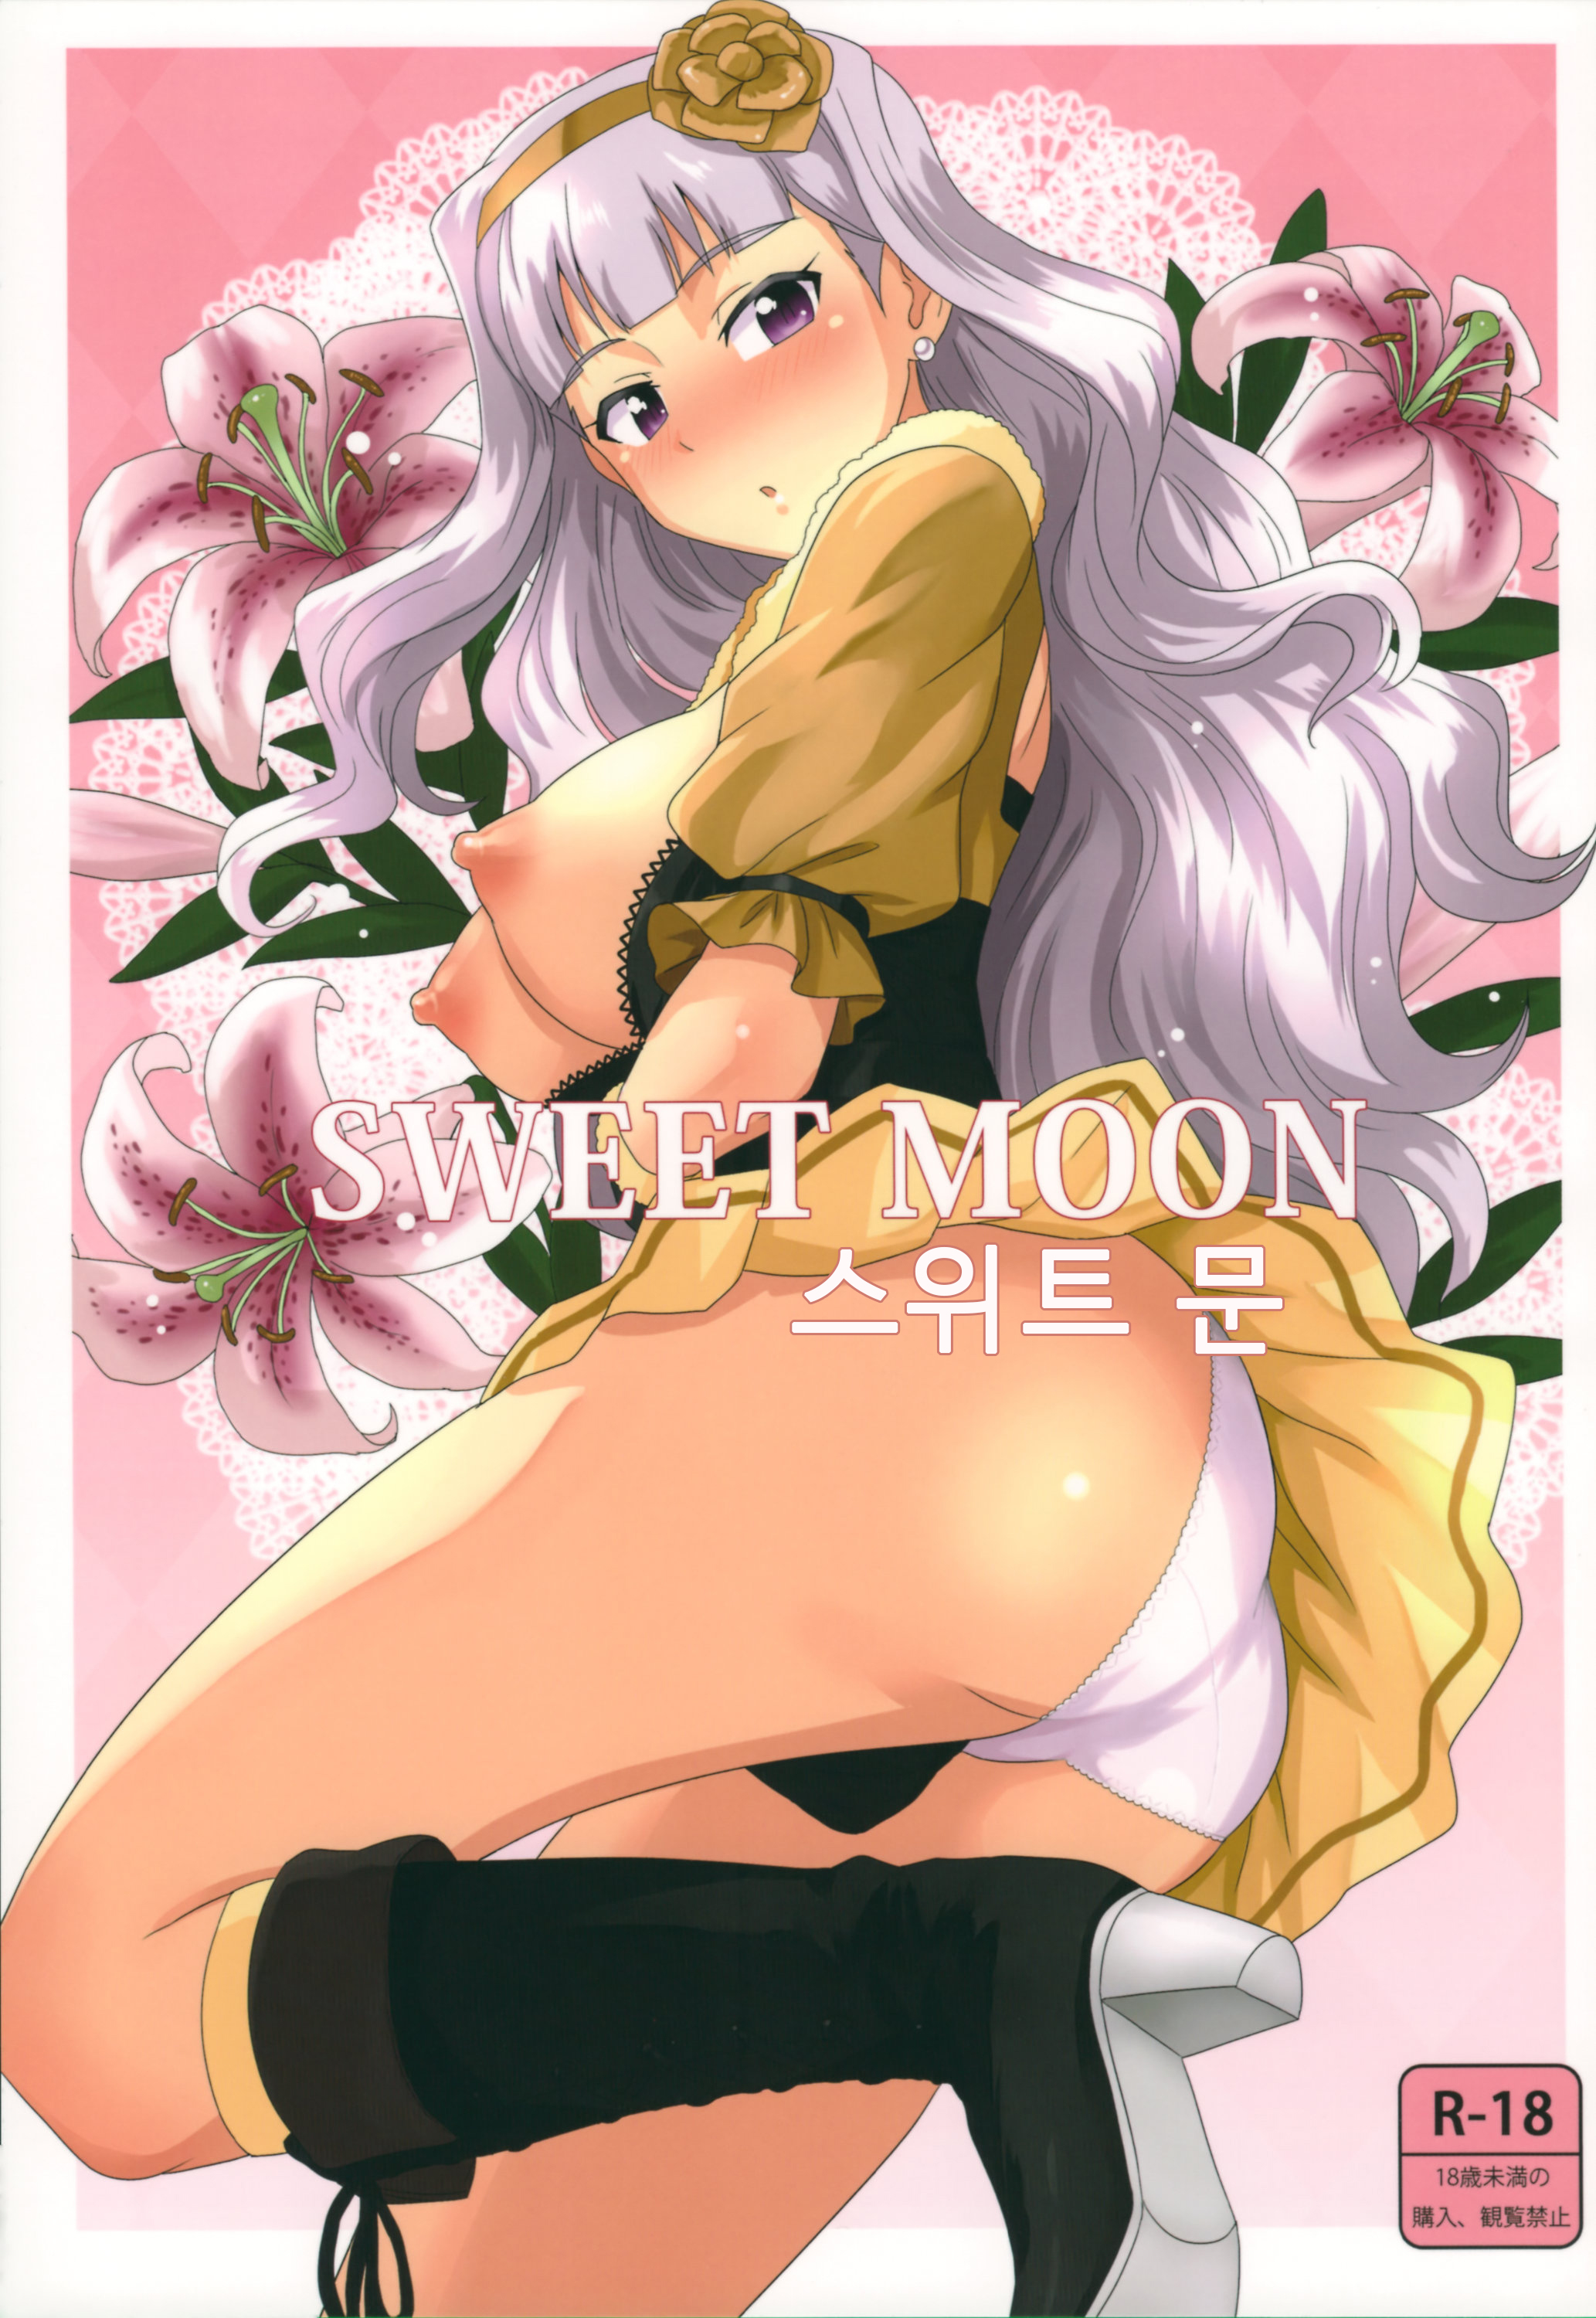 SWEET MOON by Tsurui Hentai Comic